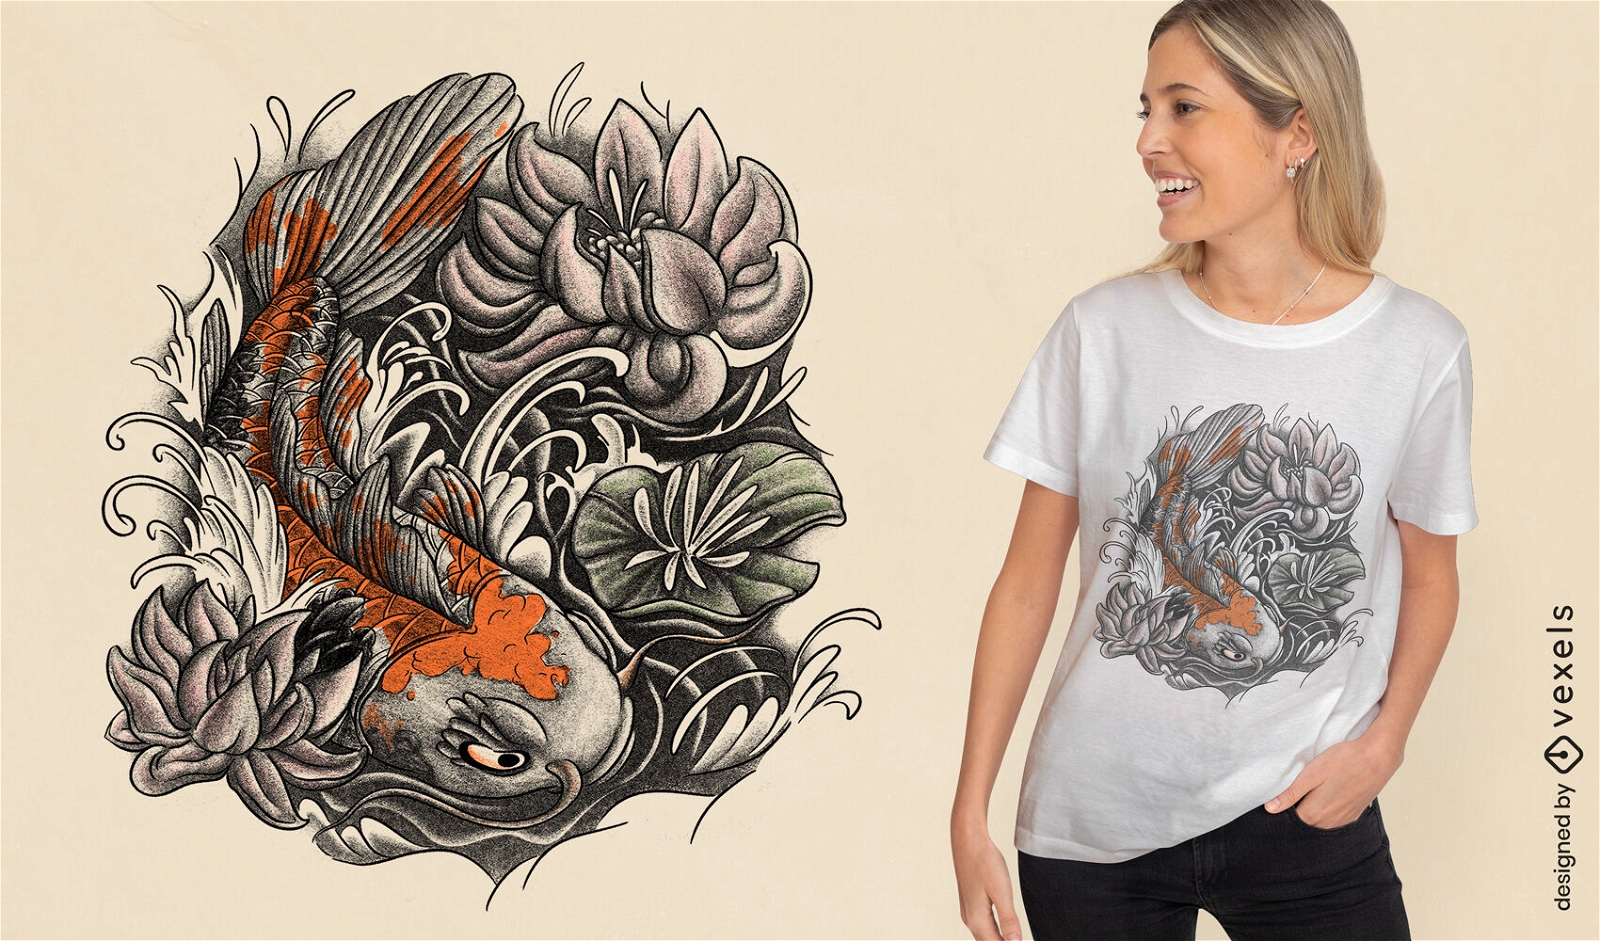 Koi fish floral t-shirt design